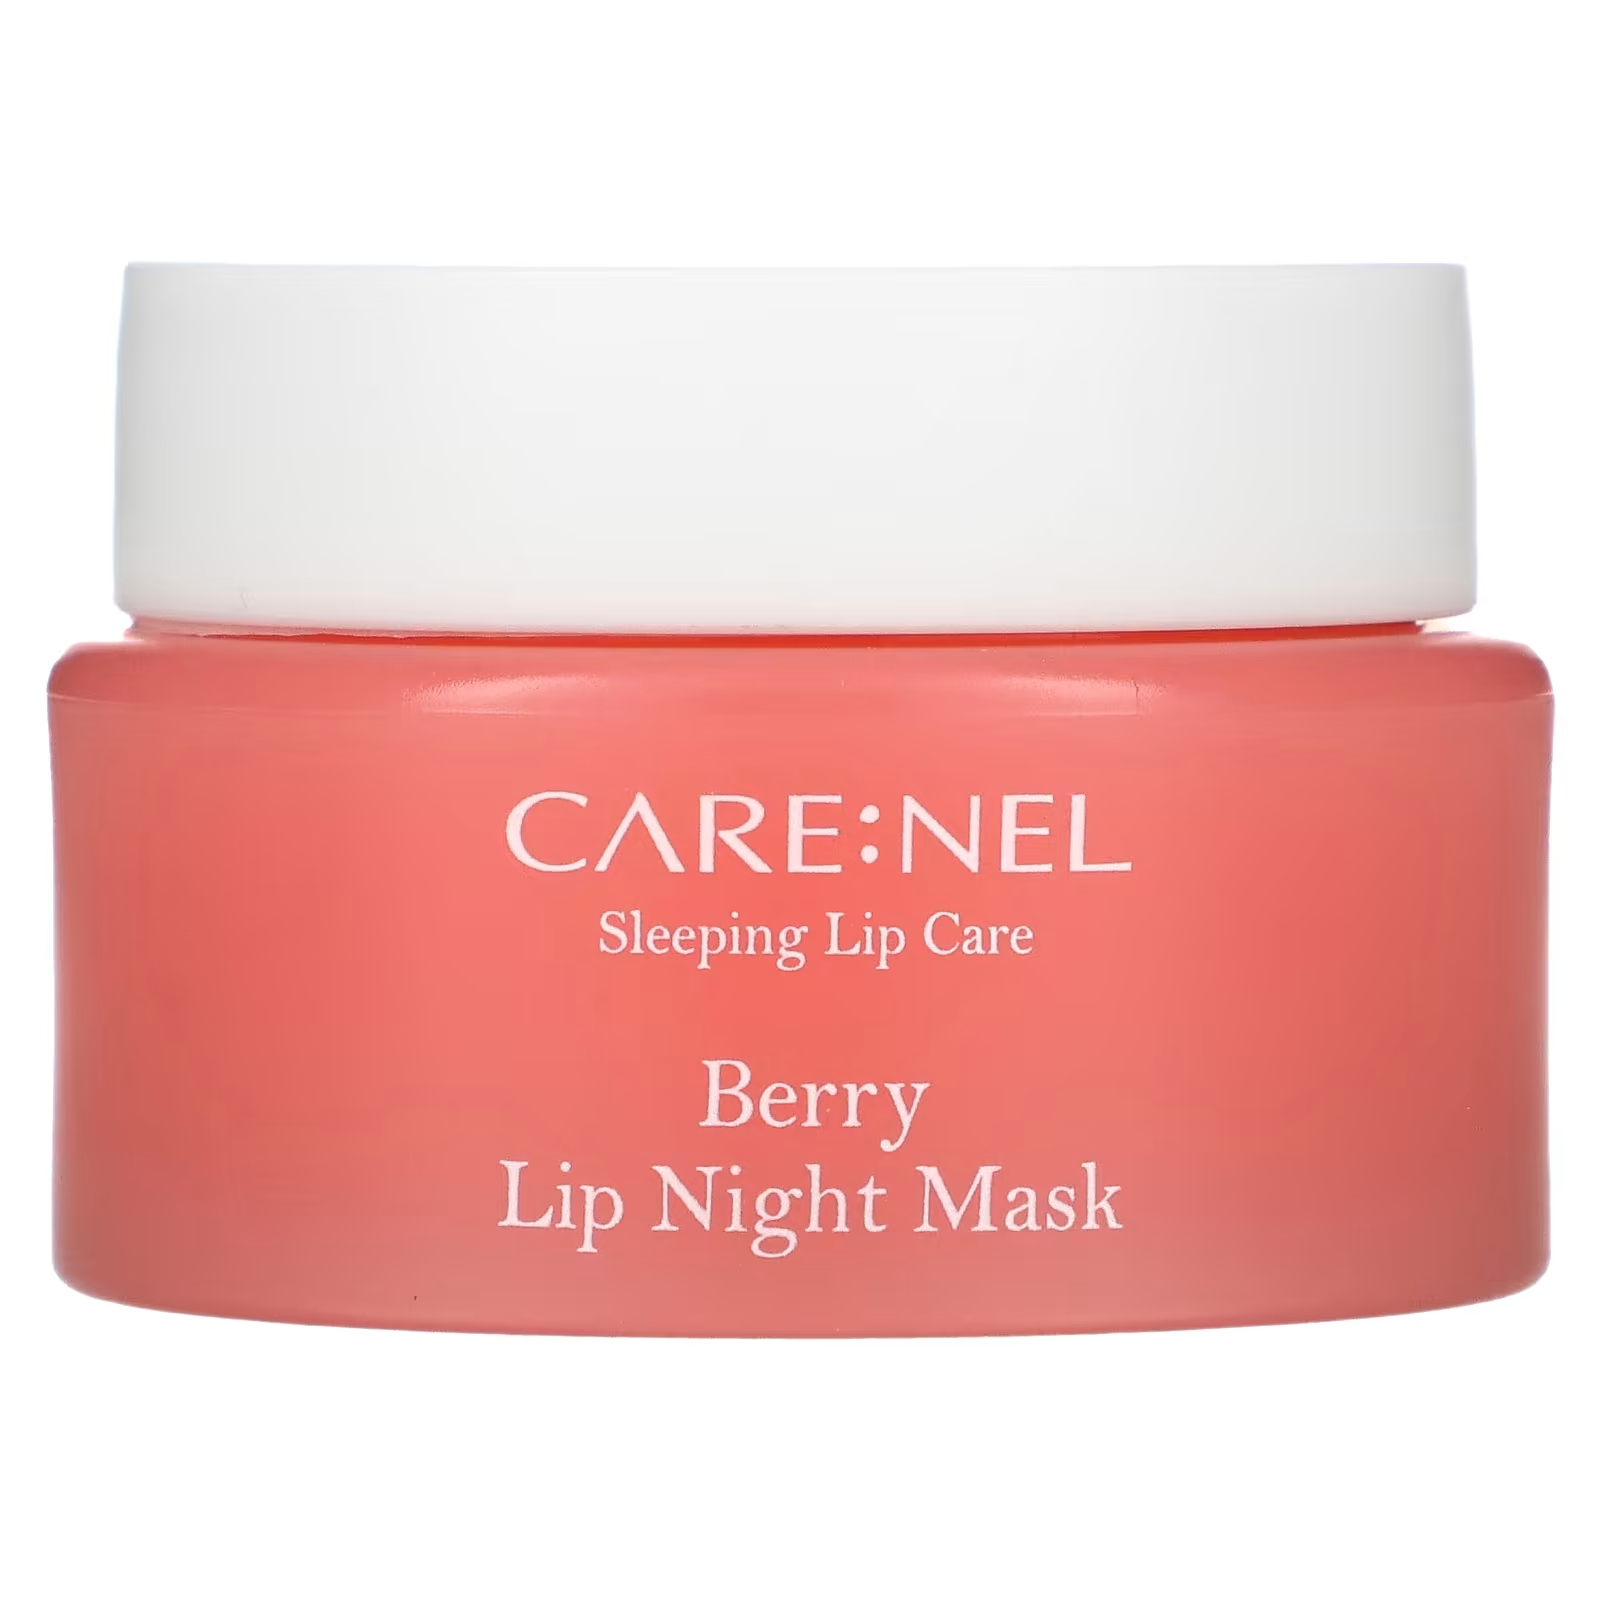 Маска ночная для губ Care:Nel ягодная laneige ночная маска для губ berry 3 г розовый